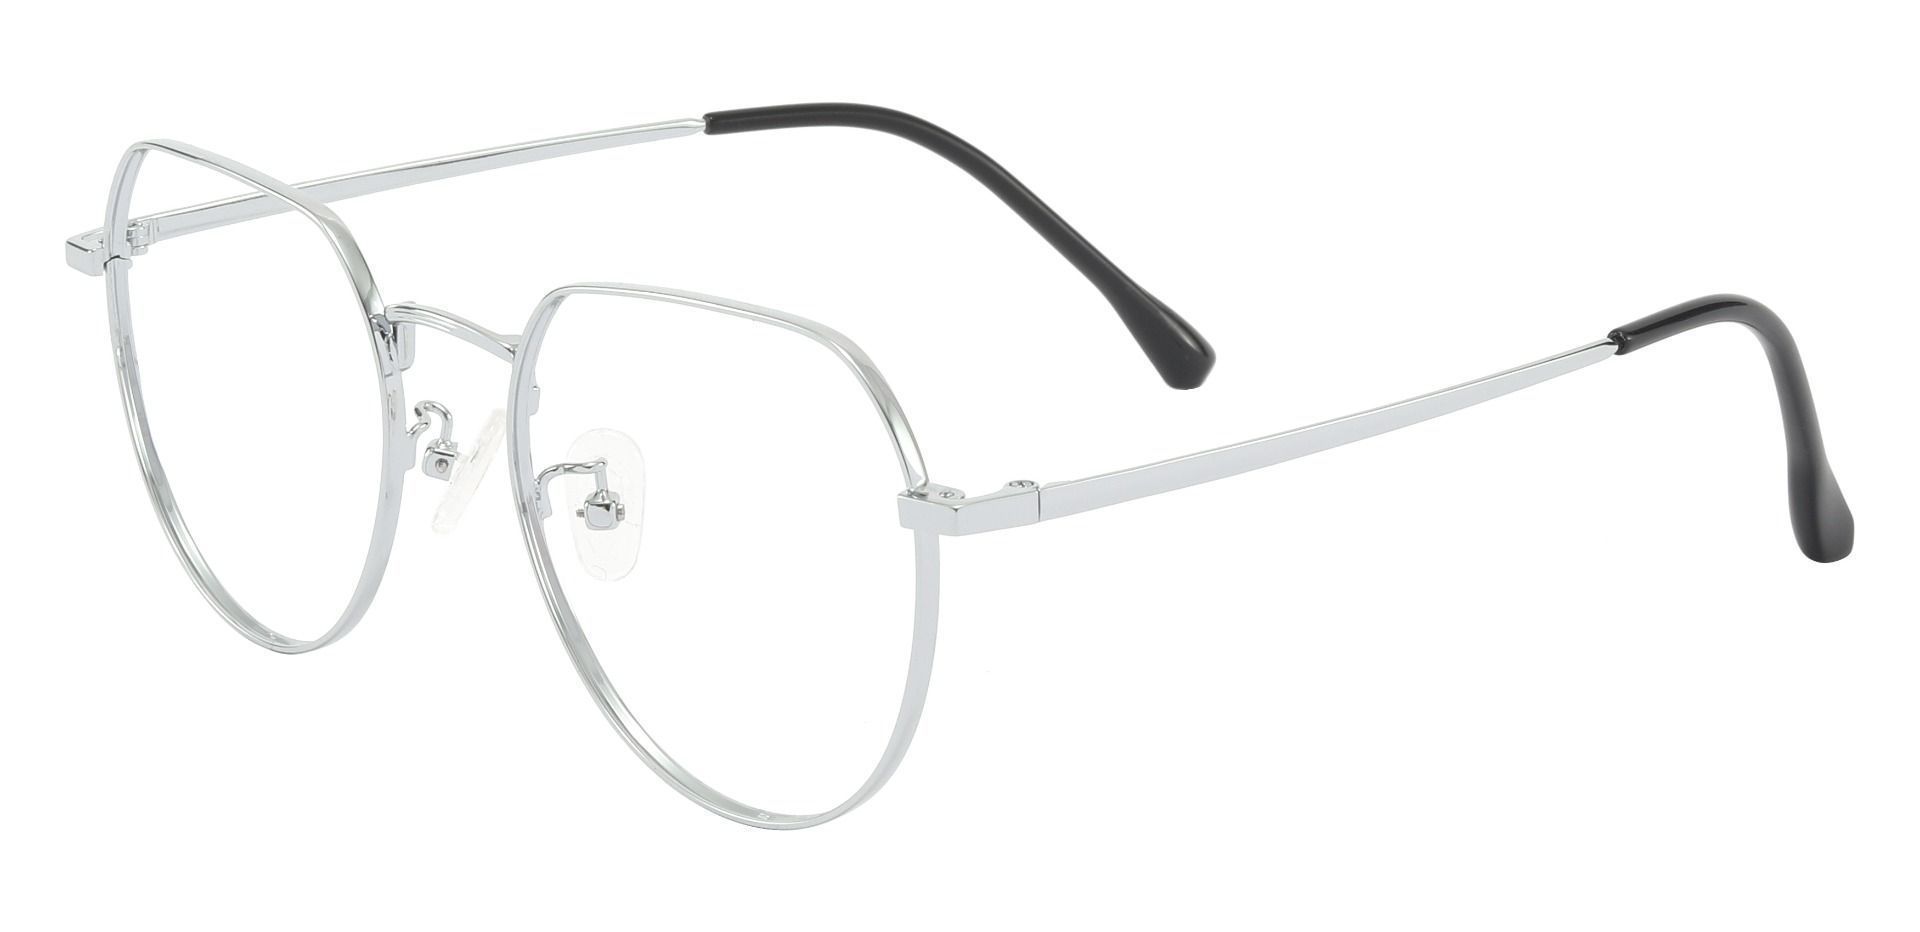 Rapid Geometric Reading Glasses - Silver